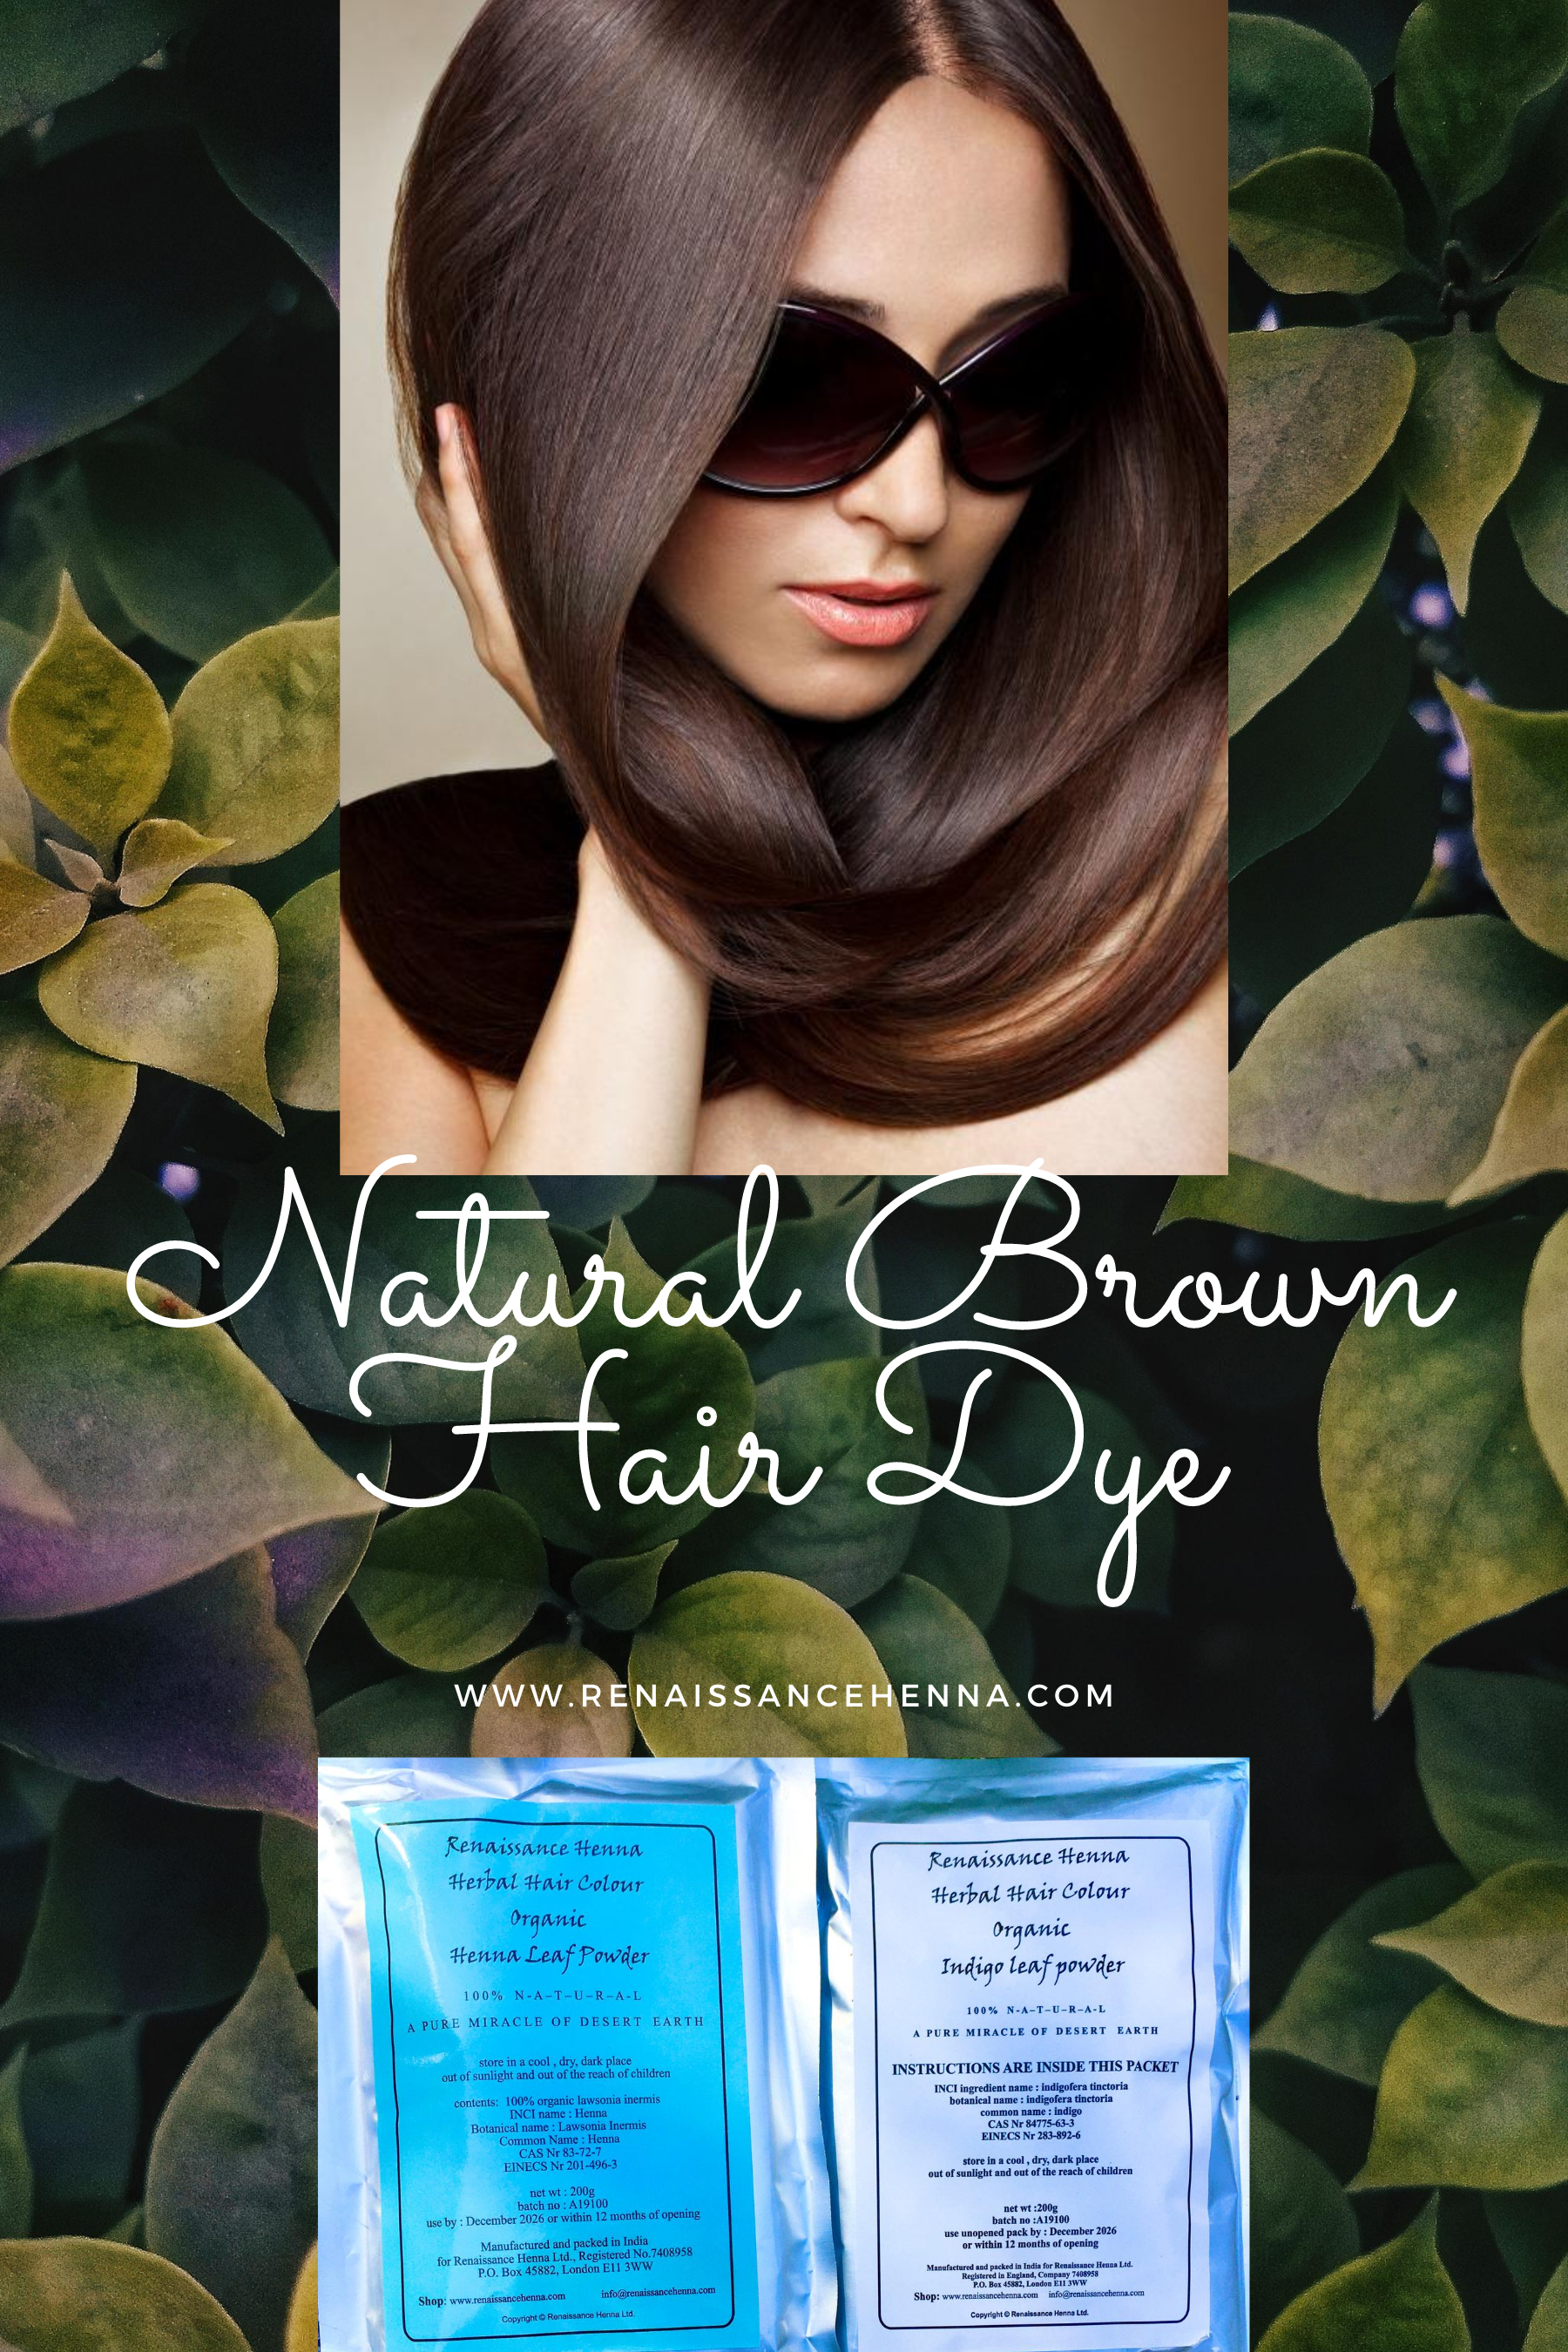 Natural Hair Dye | Organic Hair Dye Dark Brown & Black